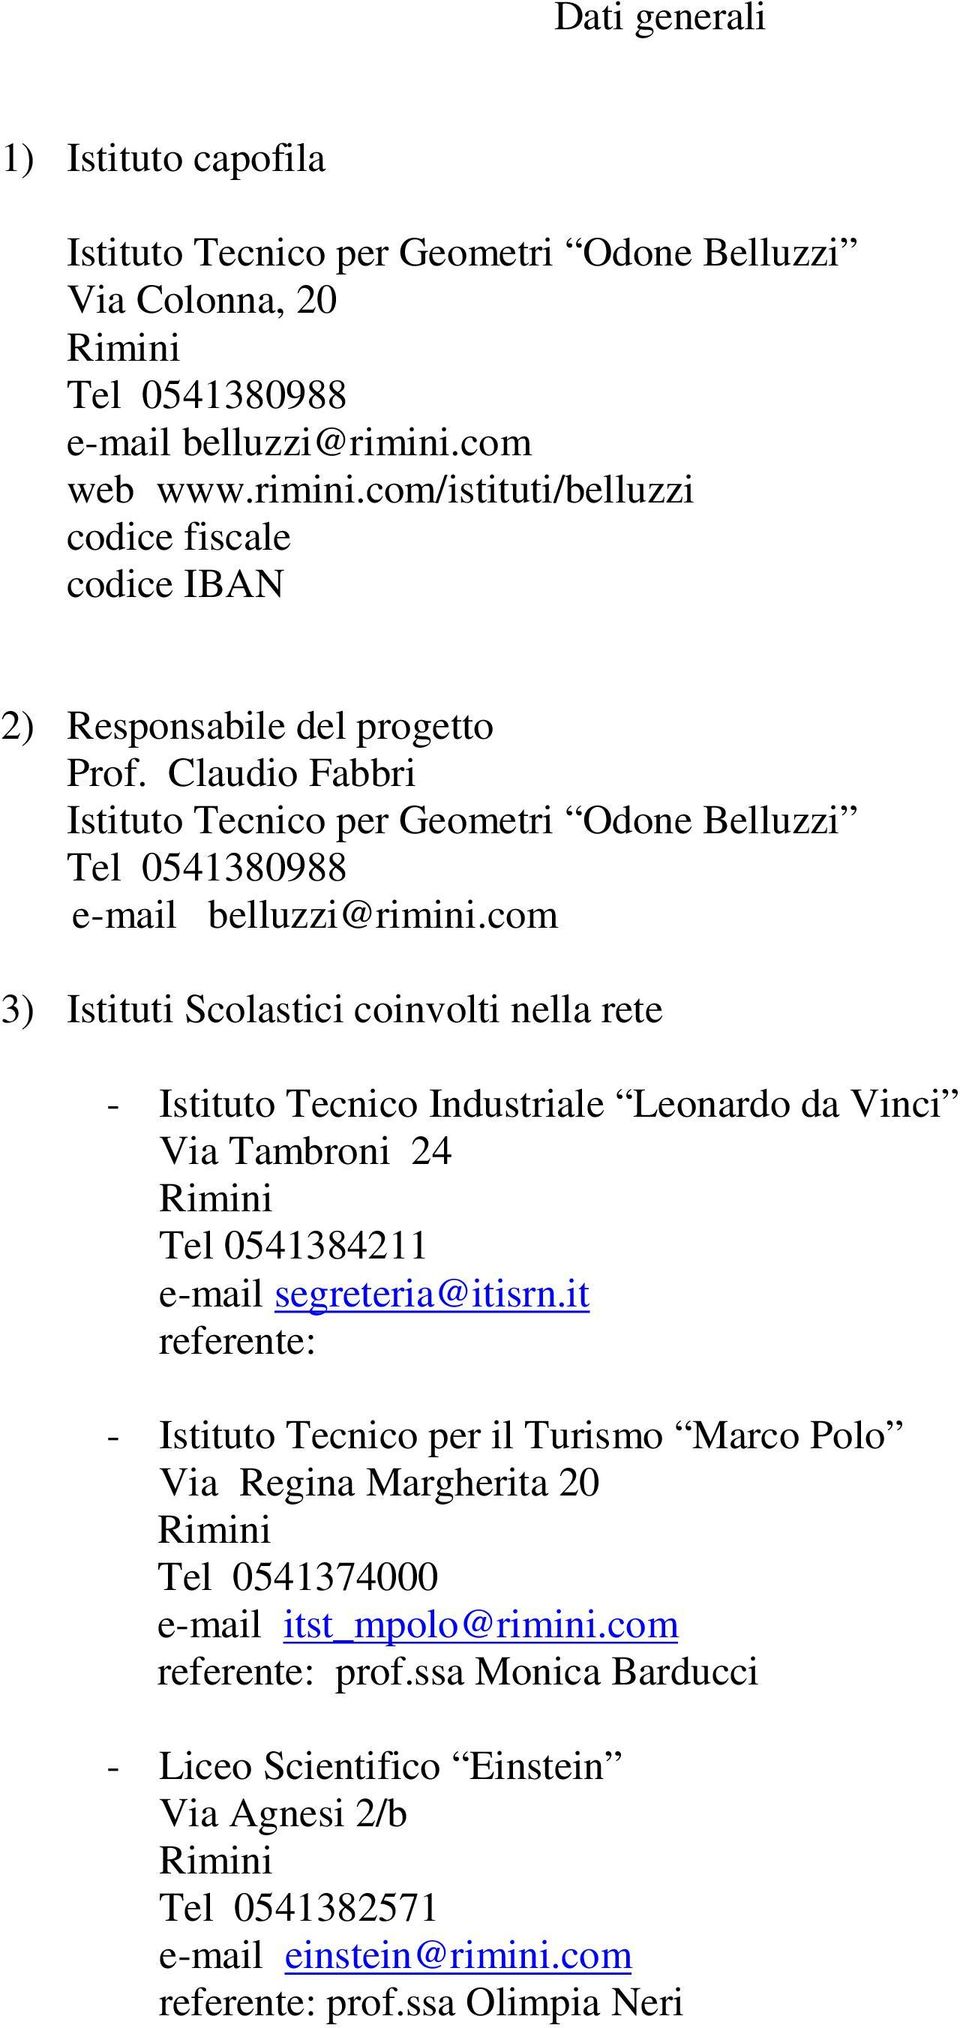 Claudio Fabbri Istituto Tecnico per Geometri Odone Belluzzi Tel 0541380988 e-mail belluzzi@rimini.